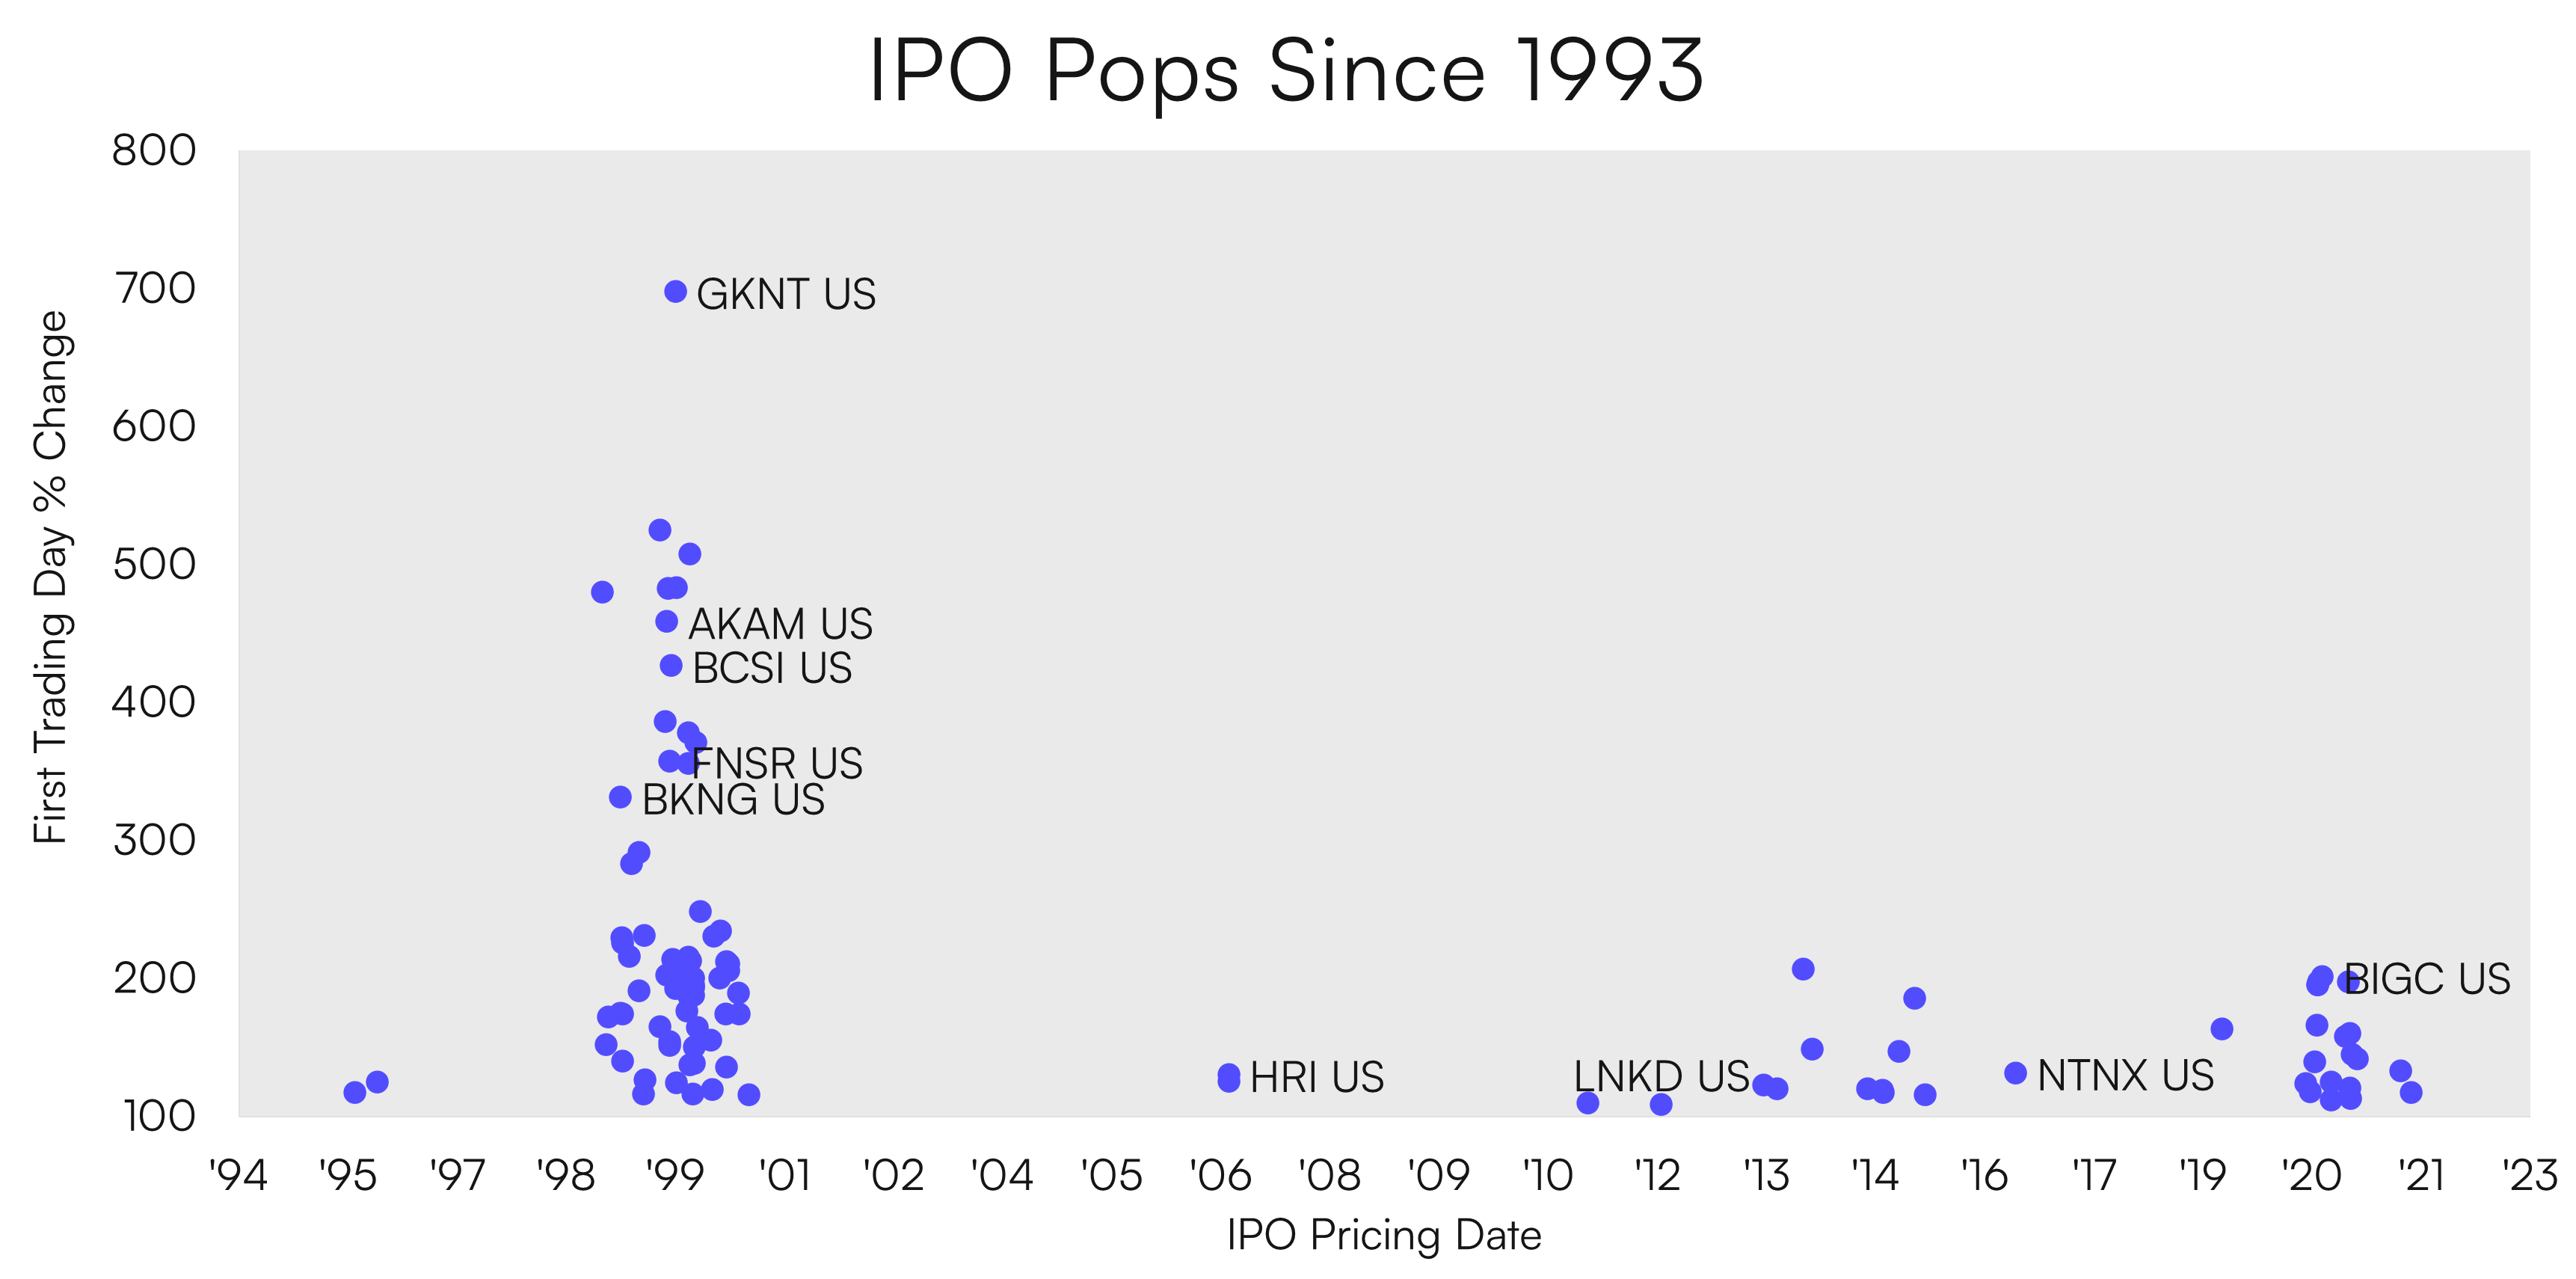 Comparing two representative IPO's from dotcom and AI eras